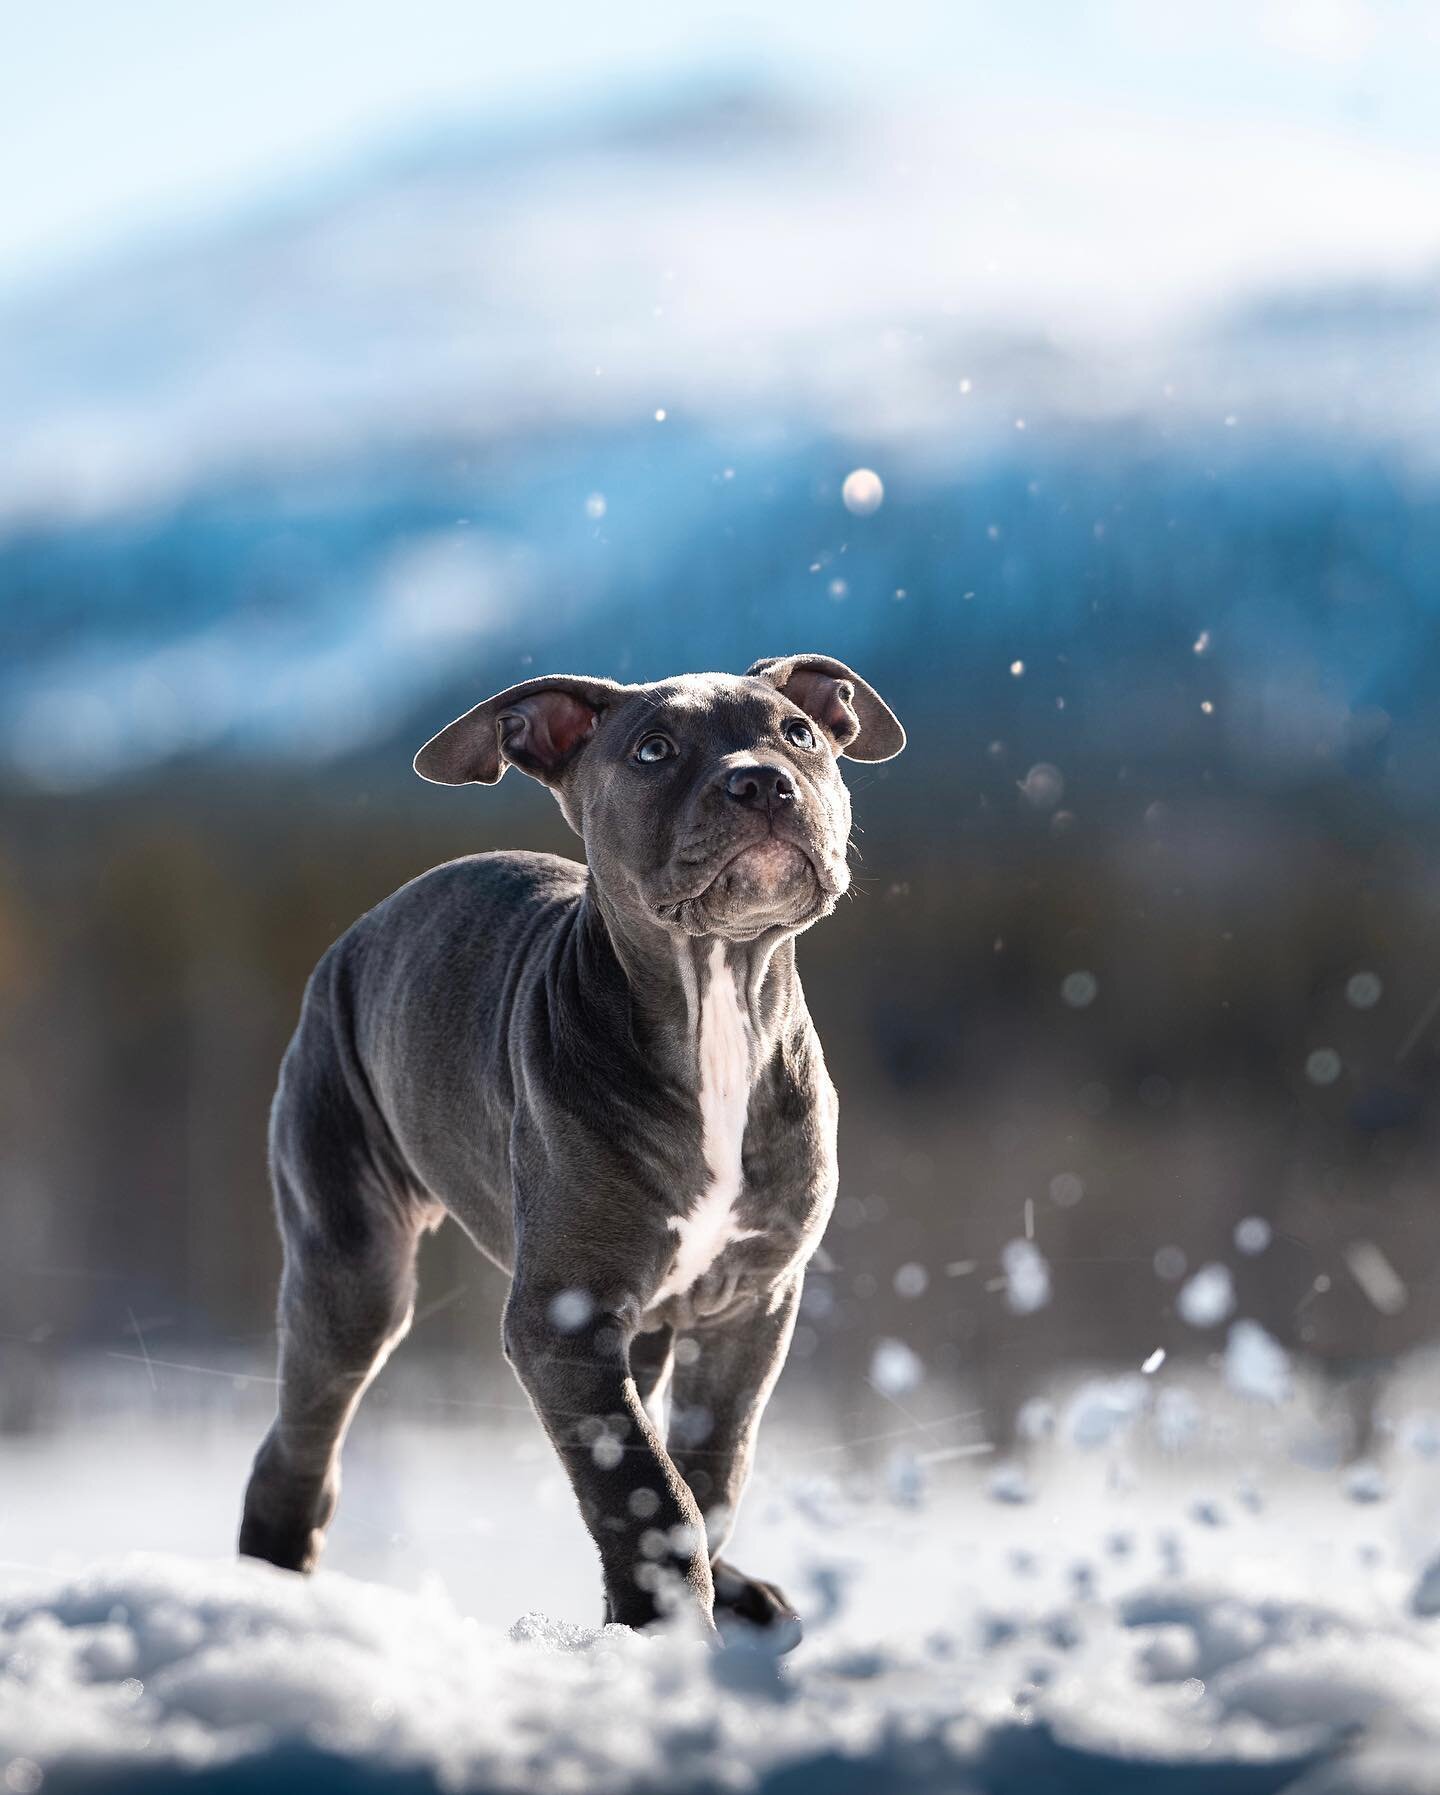 ↠ Our baby&rsquo;s first arctic spring🤍☀️❄️ #11weeks #marabel 

#sonyalpha #sonyambassador #bealpha #sonya1 #sonygmaster #dogsofinstagram #puppylove #a1 #animalphotography #dogstagram #dogoftheday #dog #pawgstagram #dogs_of_instagram #dogsofinstawor